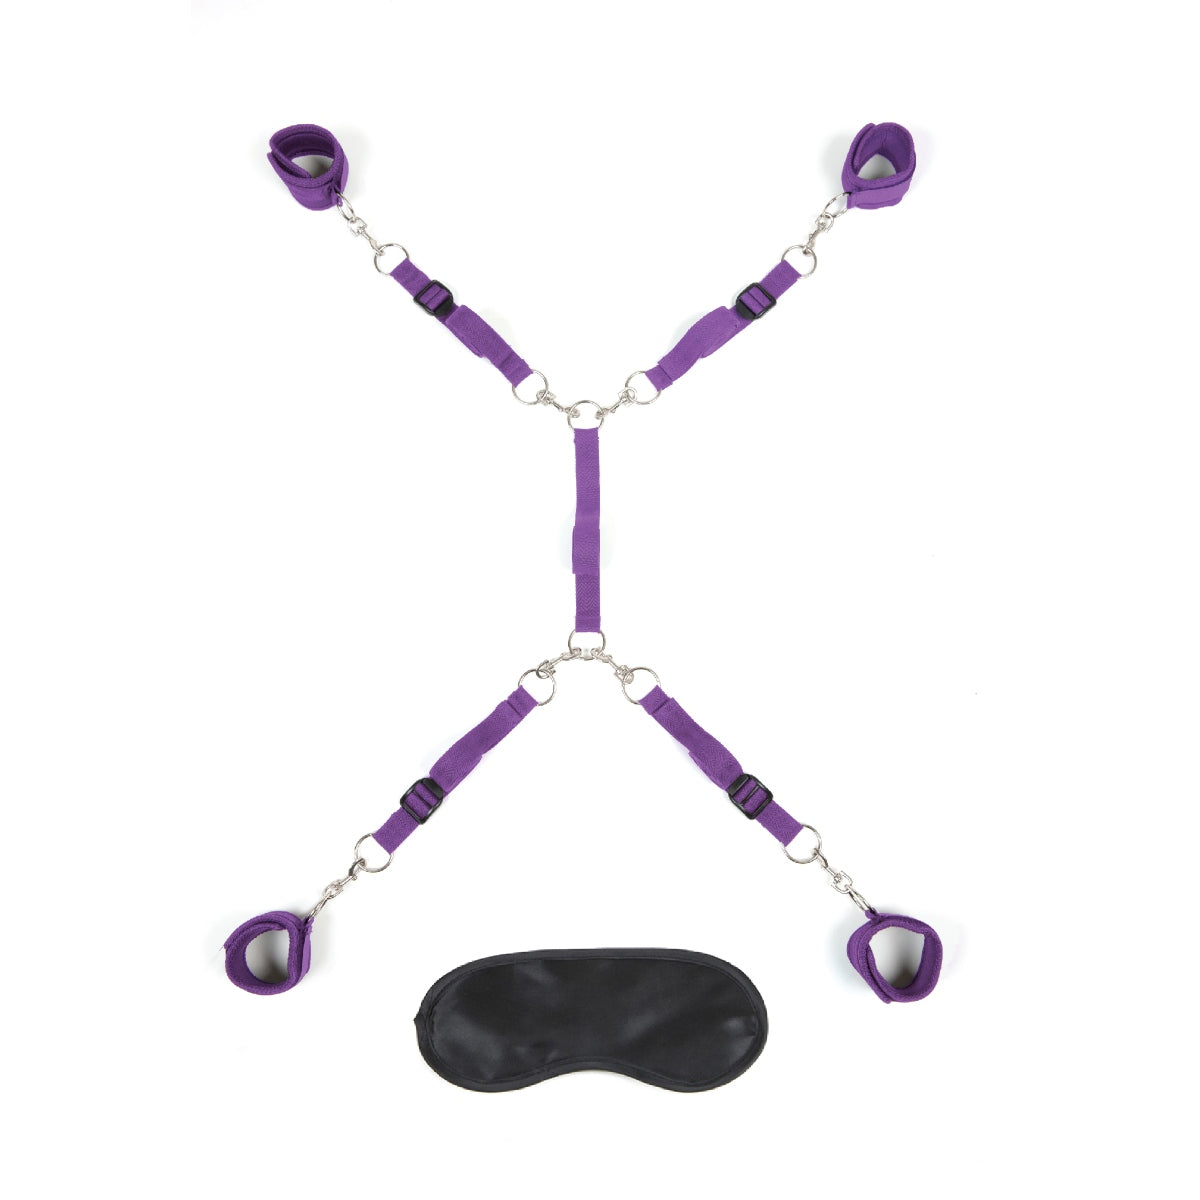 Lux Fetish 7 Piece Bed Spreader Playful Restraint System Purple